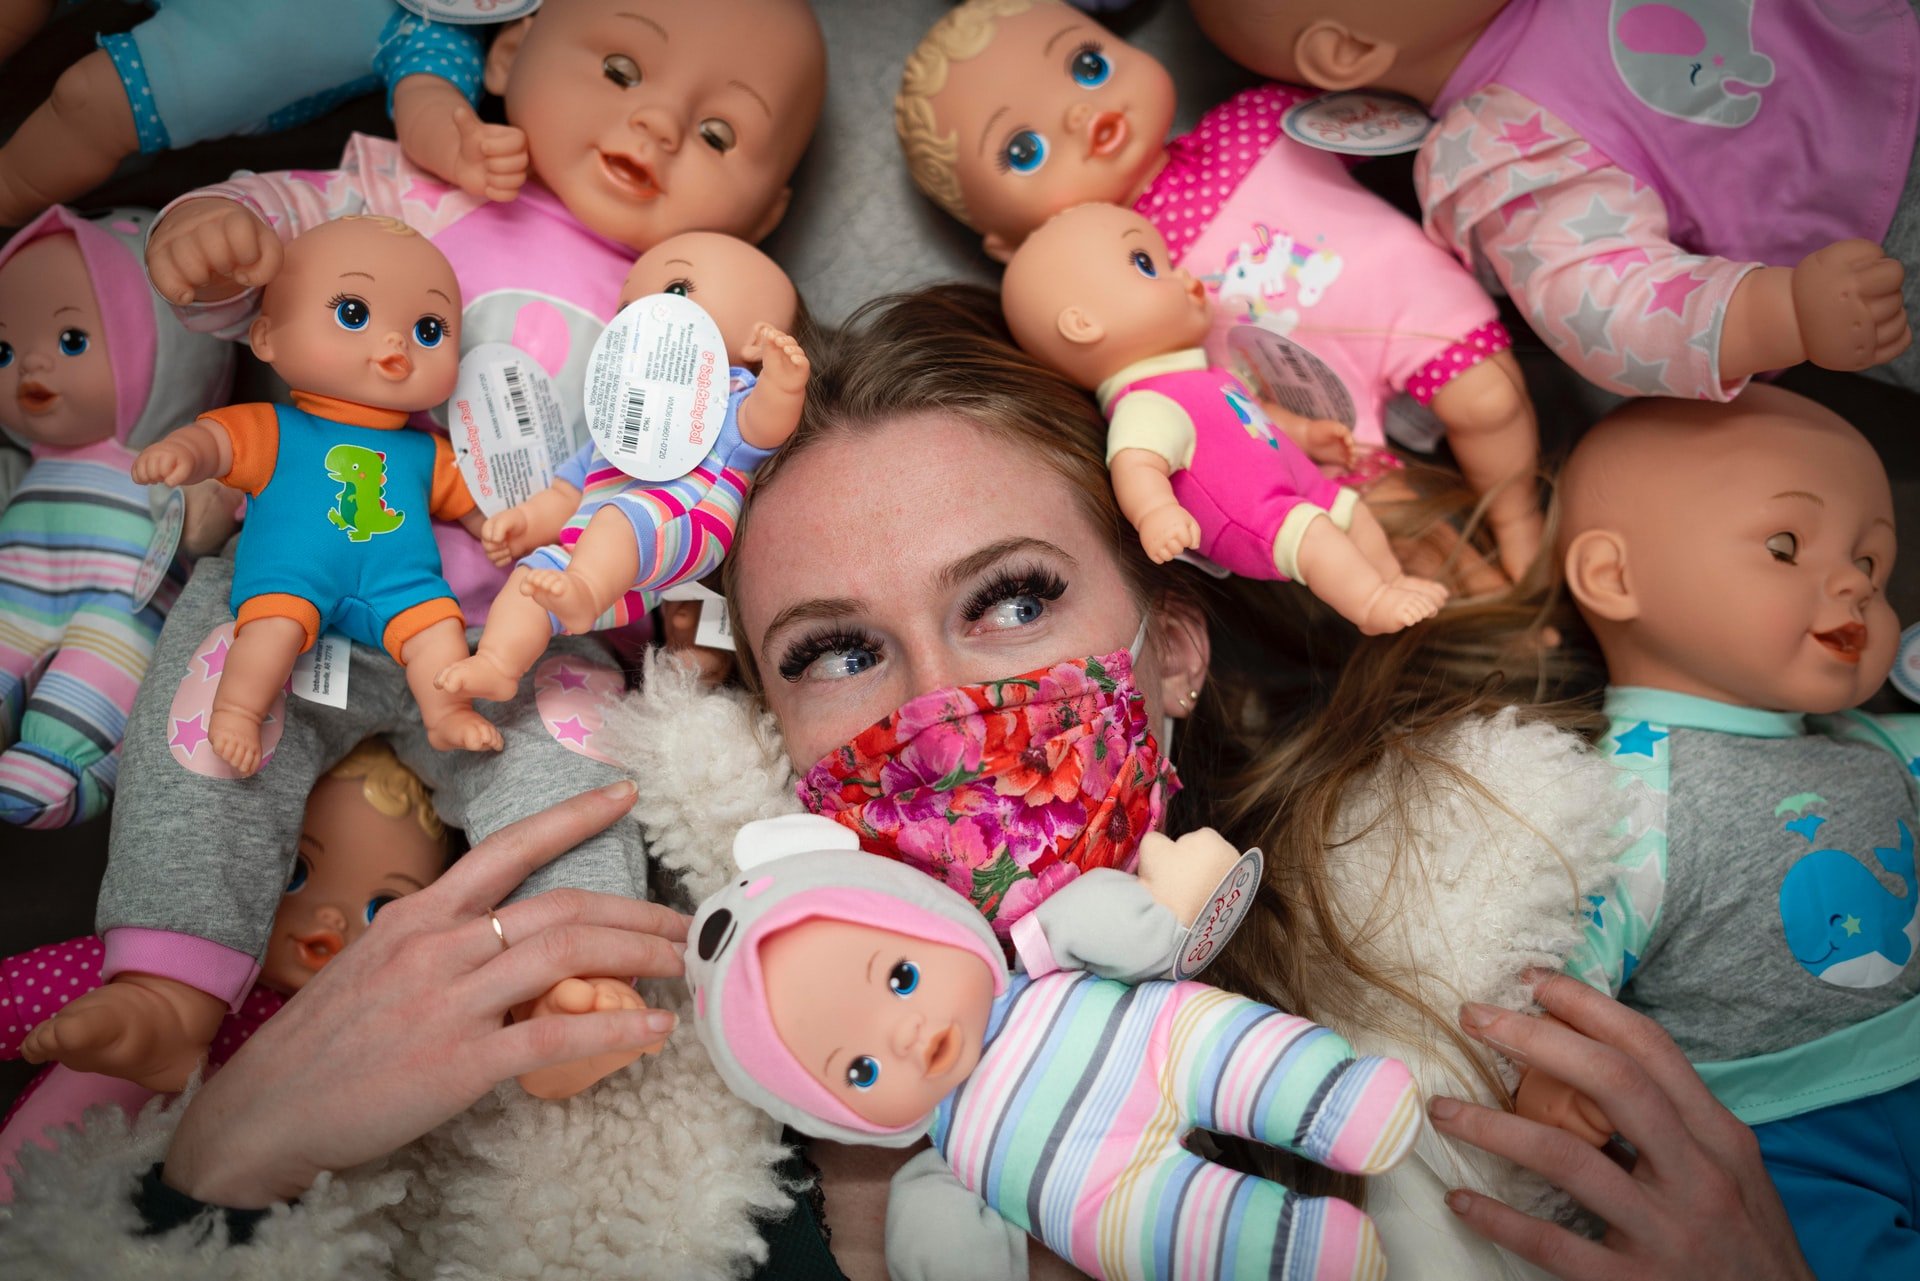 Joven rodeada de muñecas. | Foto: Unsplash